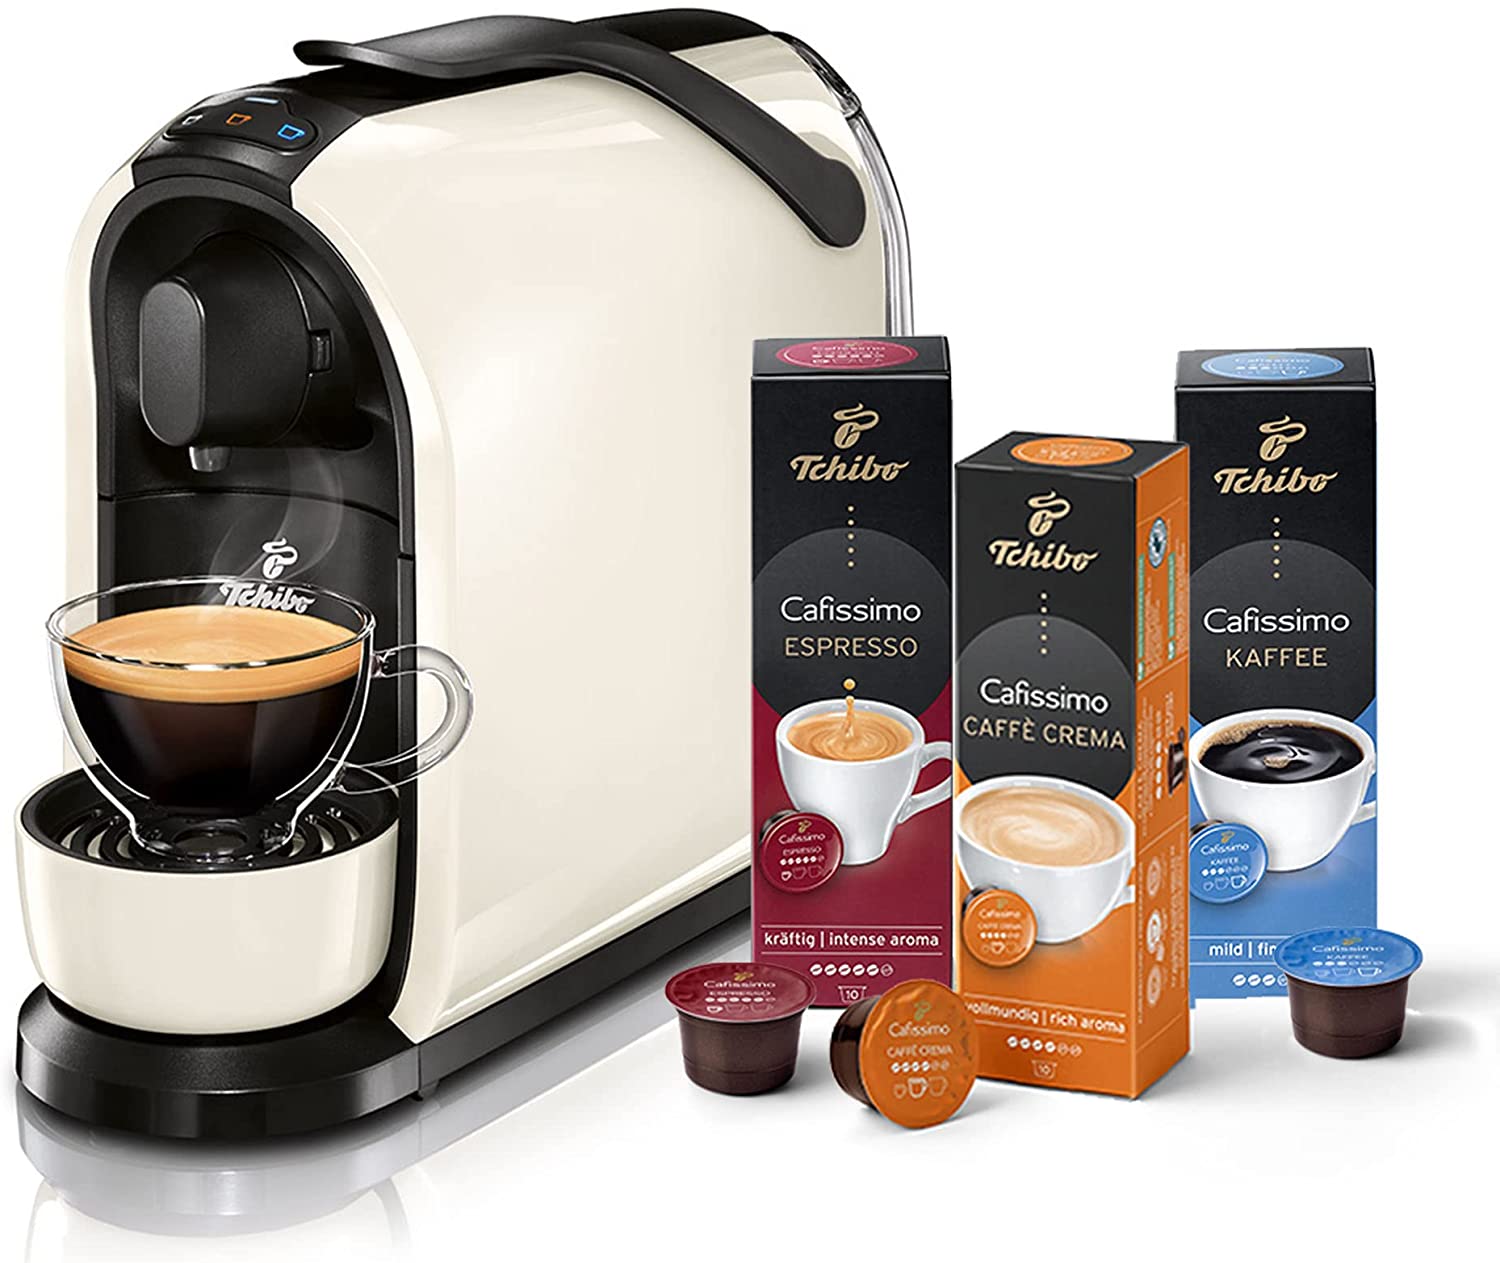 Tchibo Cafissimo Pure Coffee Machine with 30 Capsules for Caffè Crema, Espresso and Coffee, Arctic Green